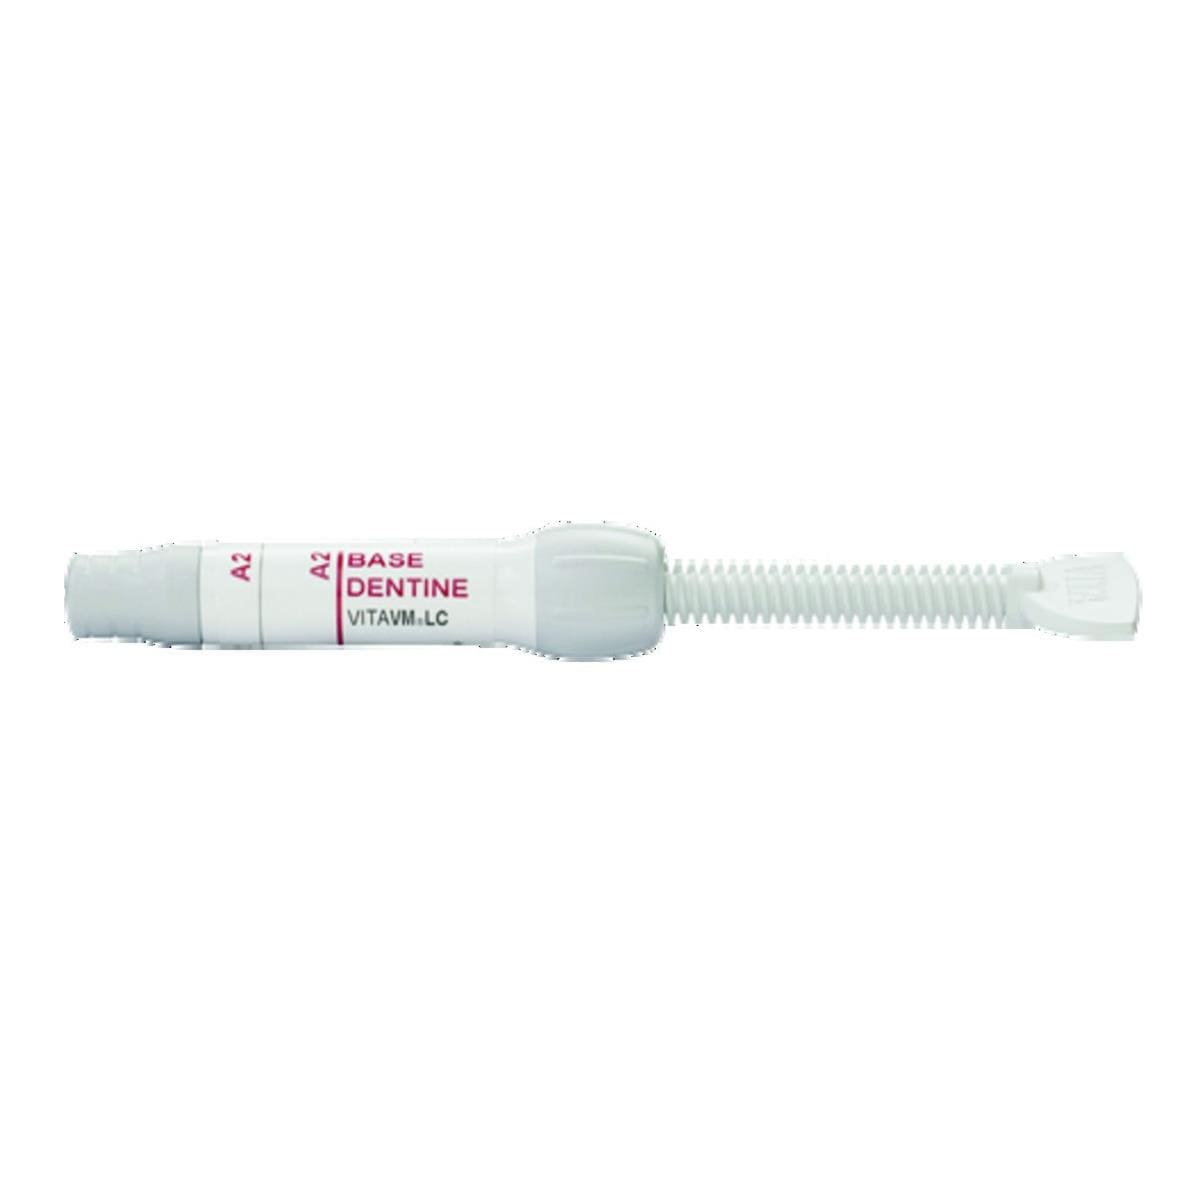 VM LC VITA - 3-D Master - Base Dentine 4R1,5 - La seringue de 4 g